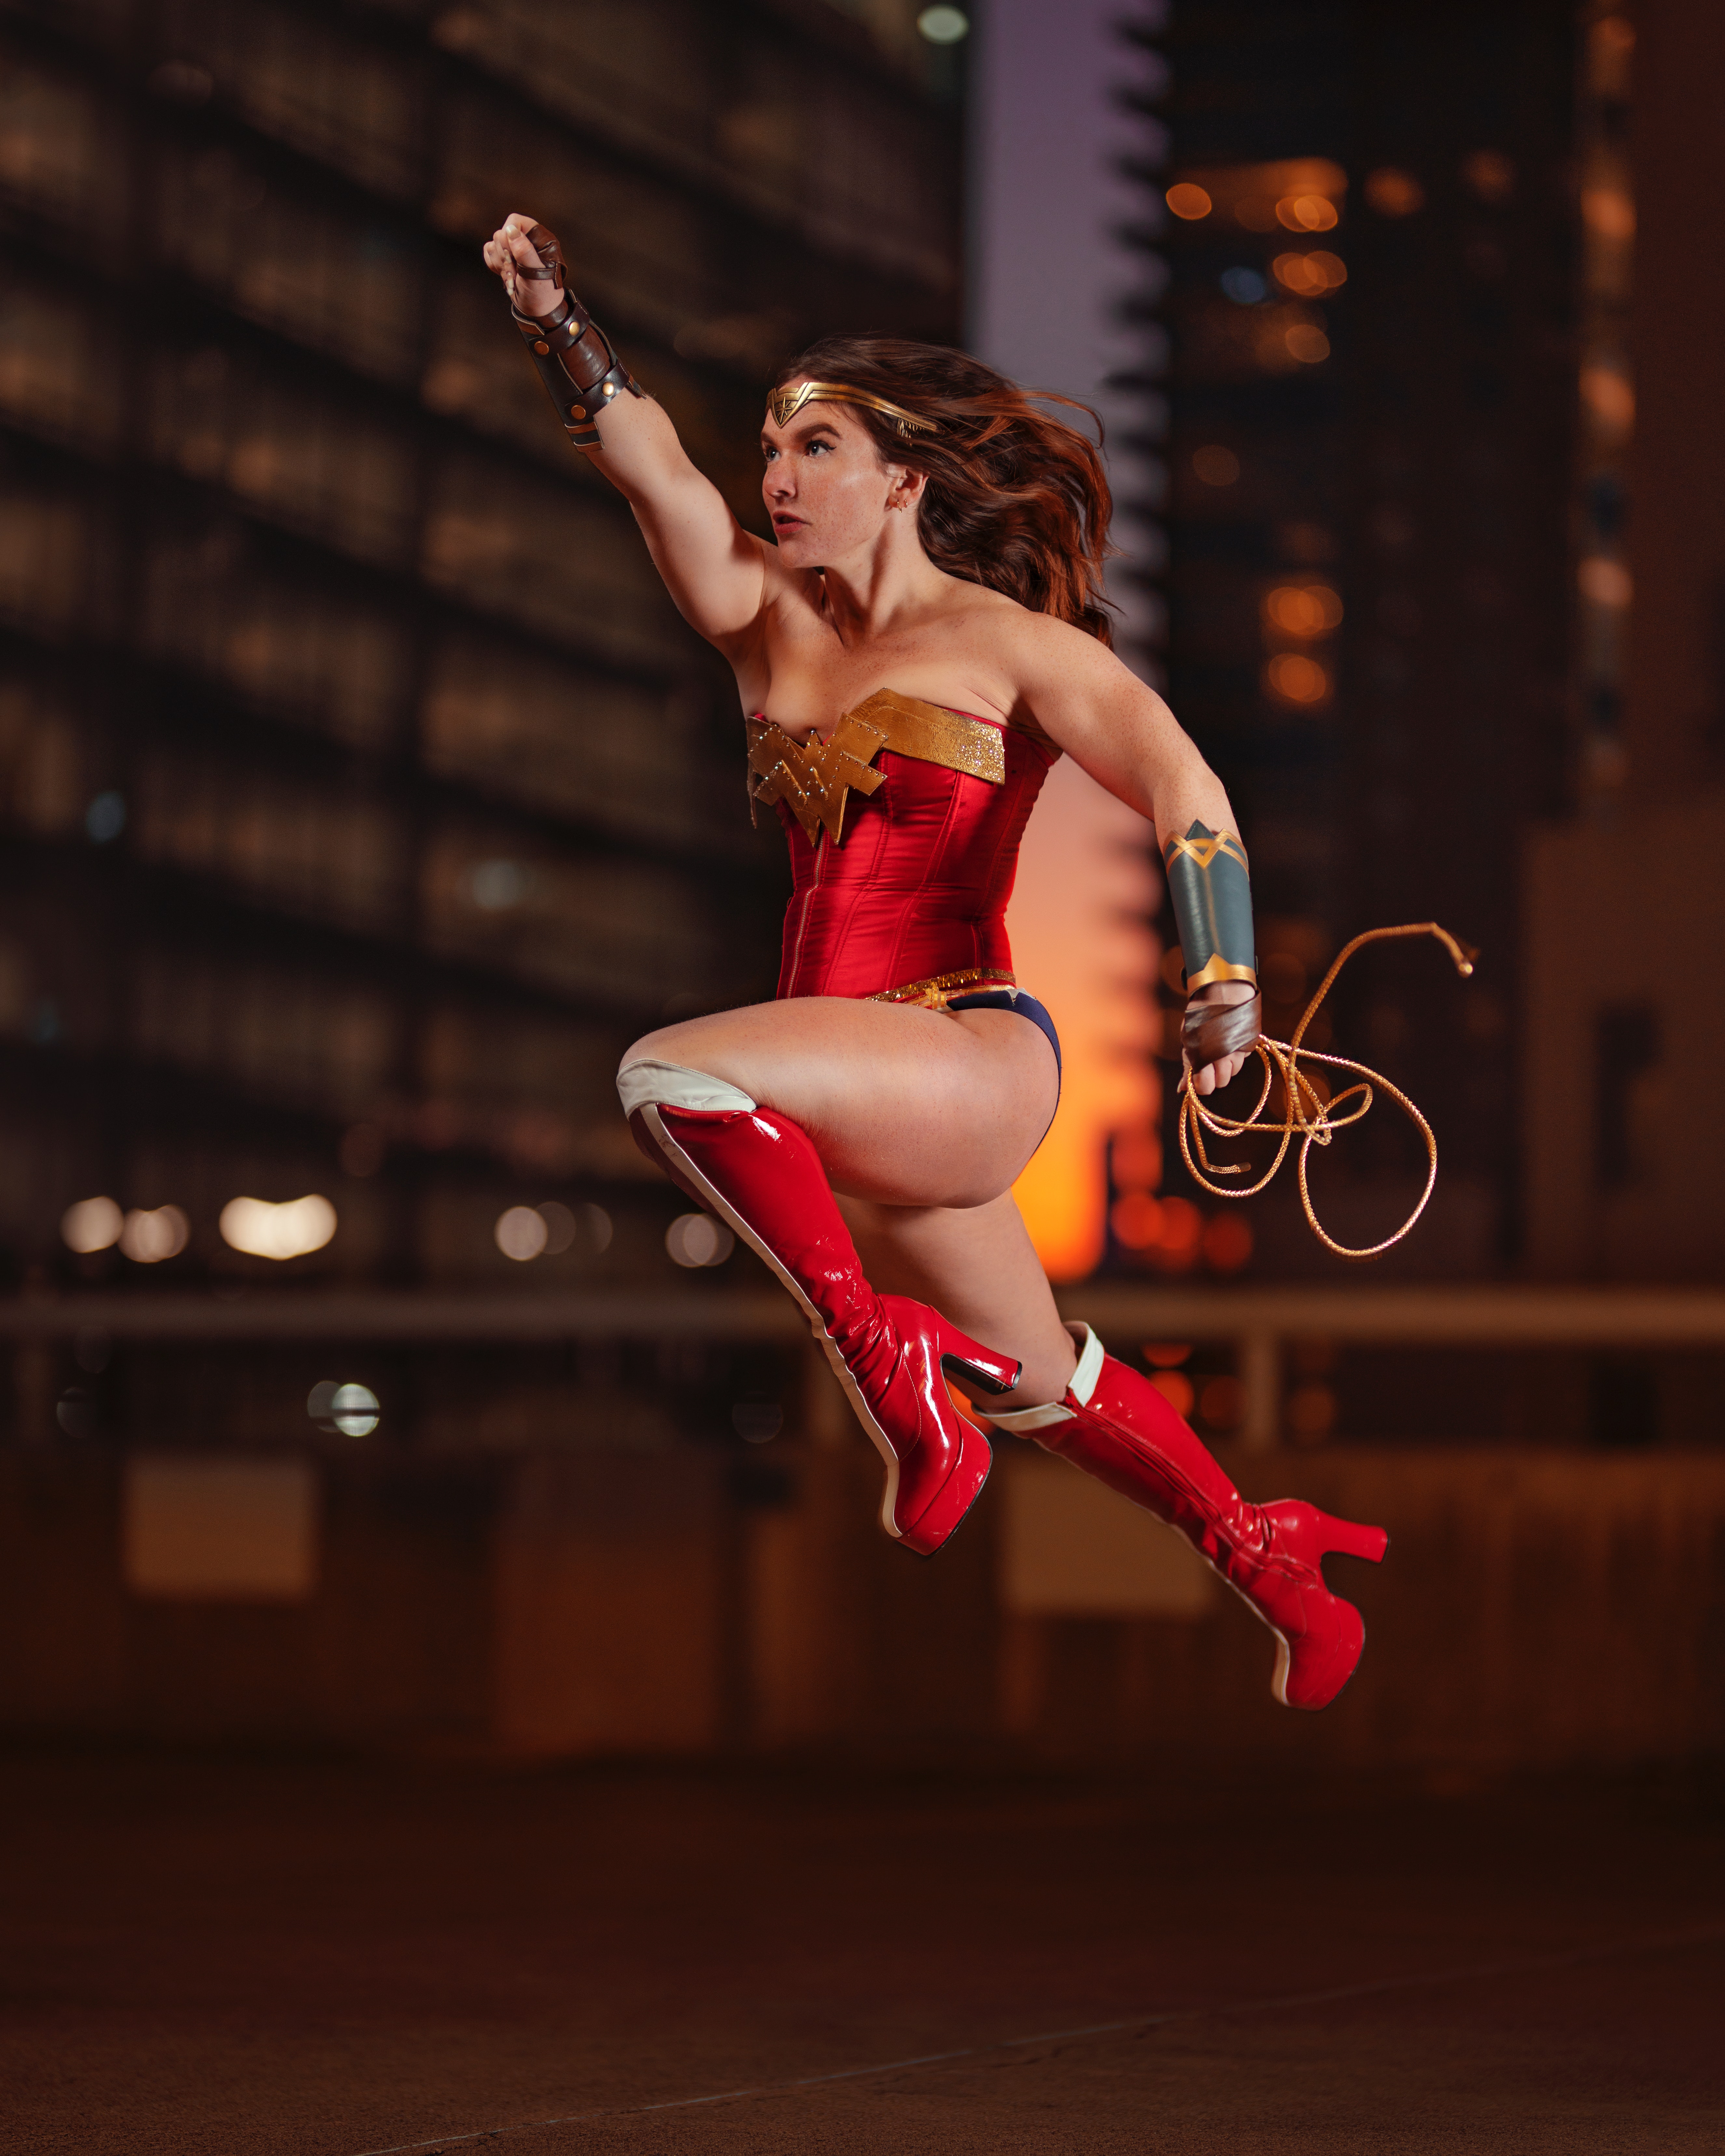 Wonderwoman saltando.